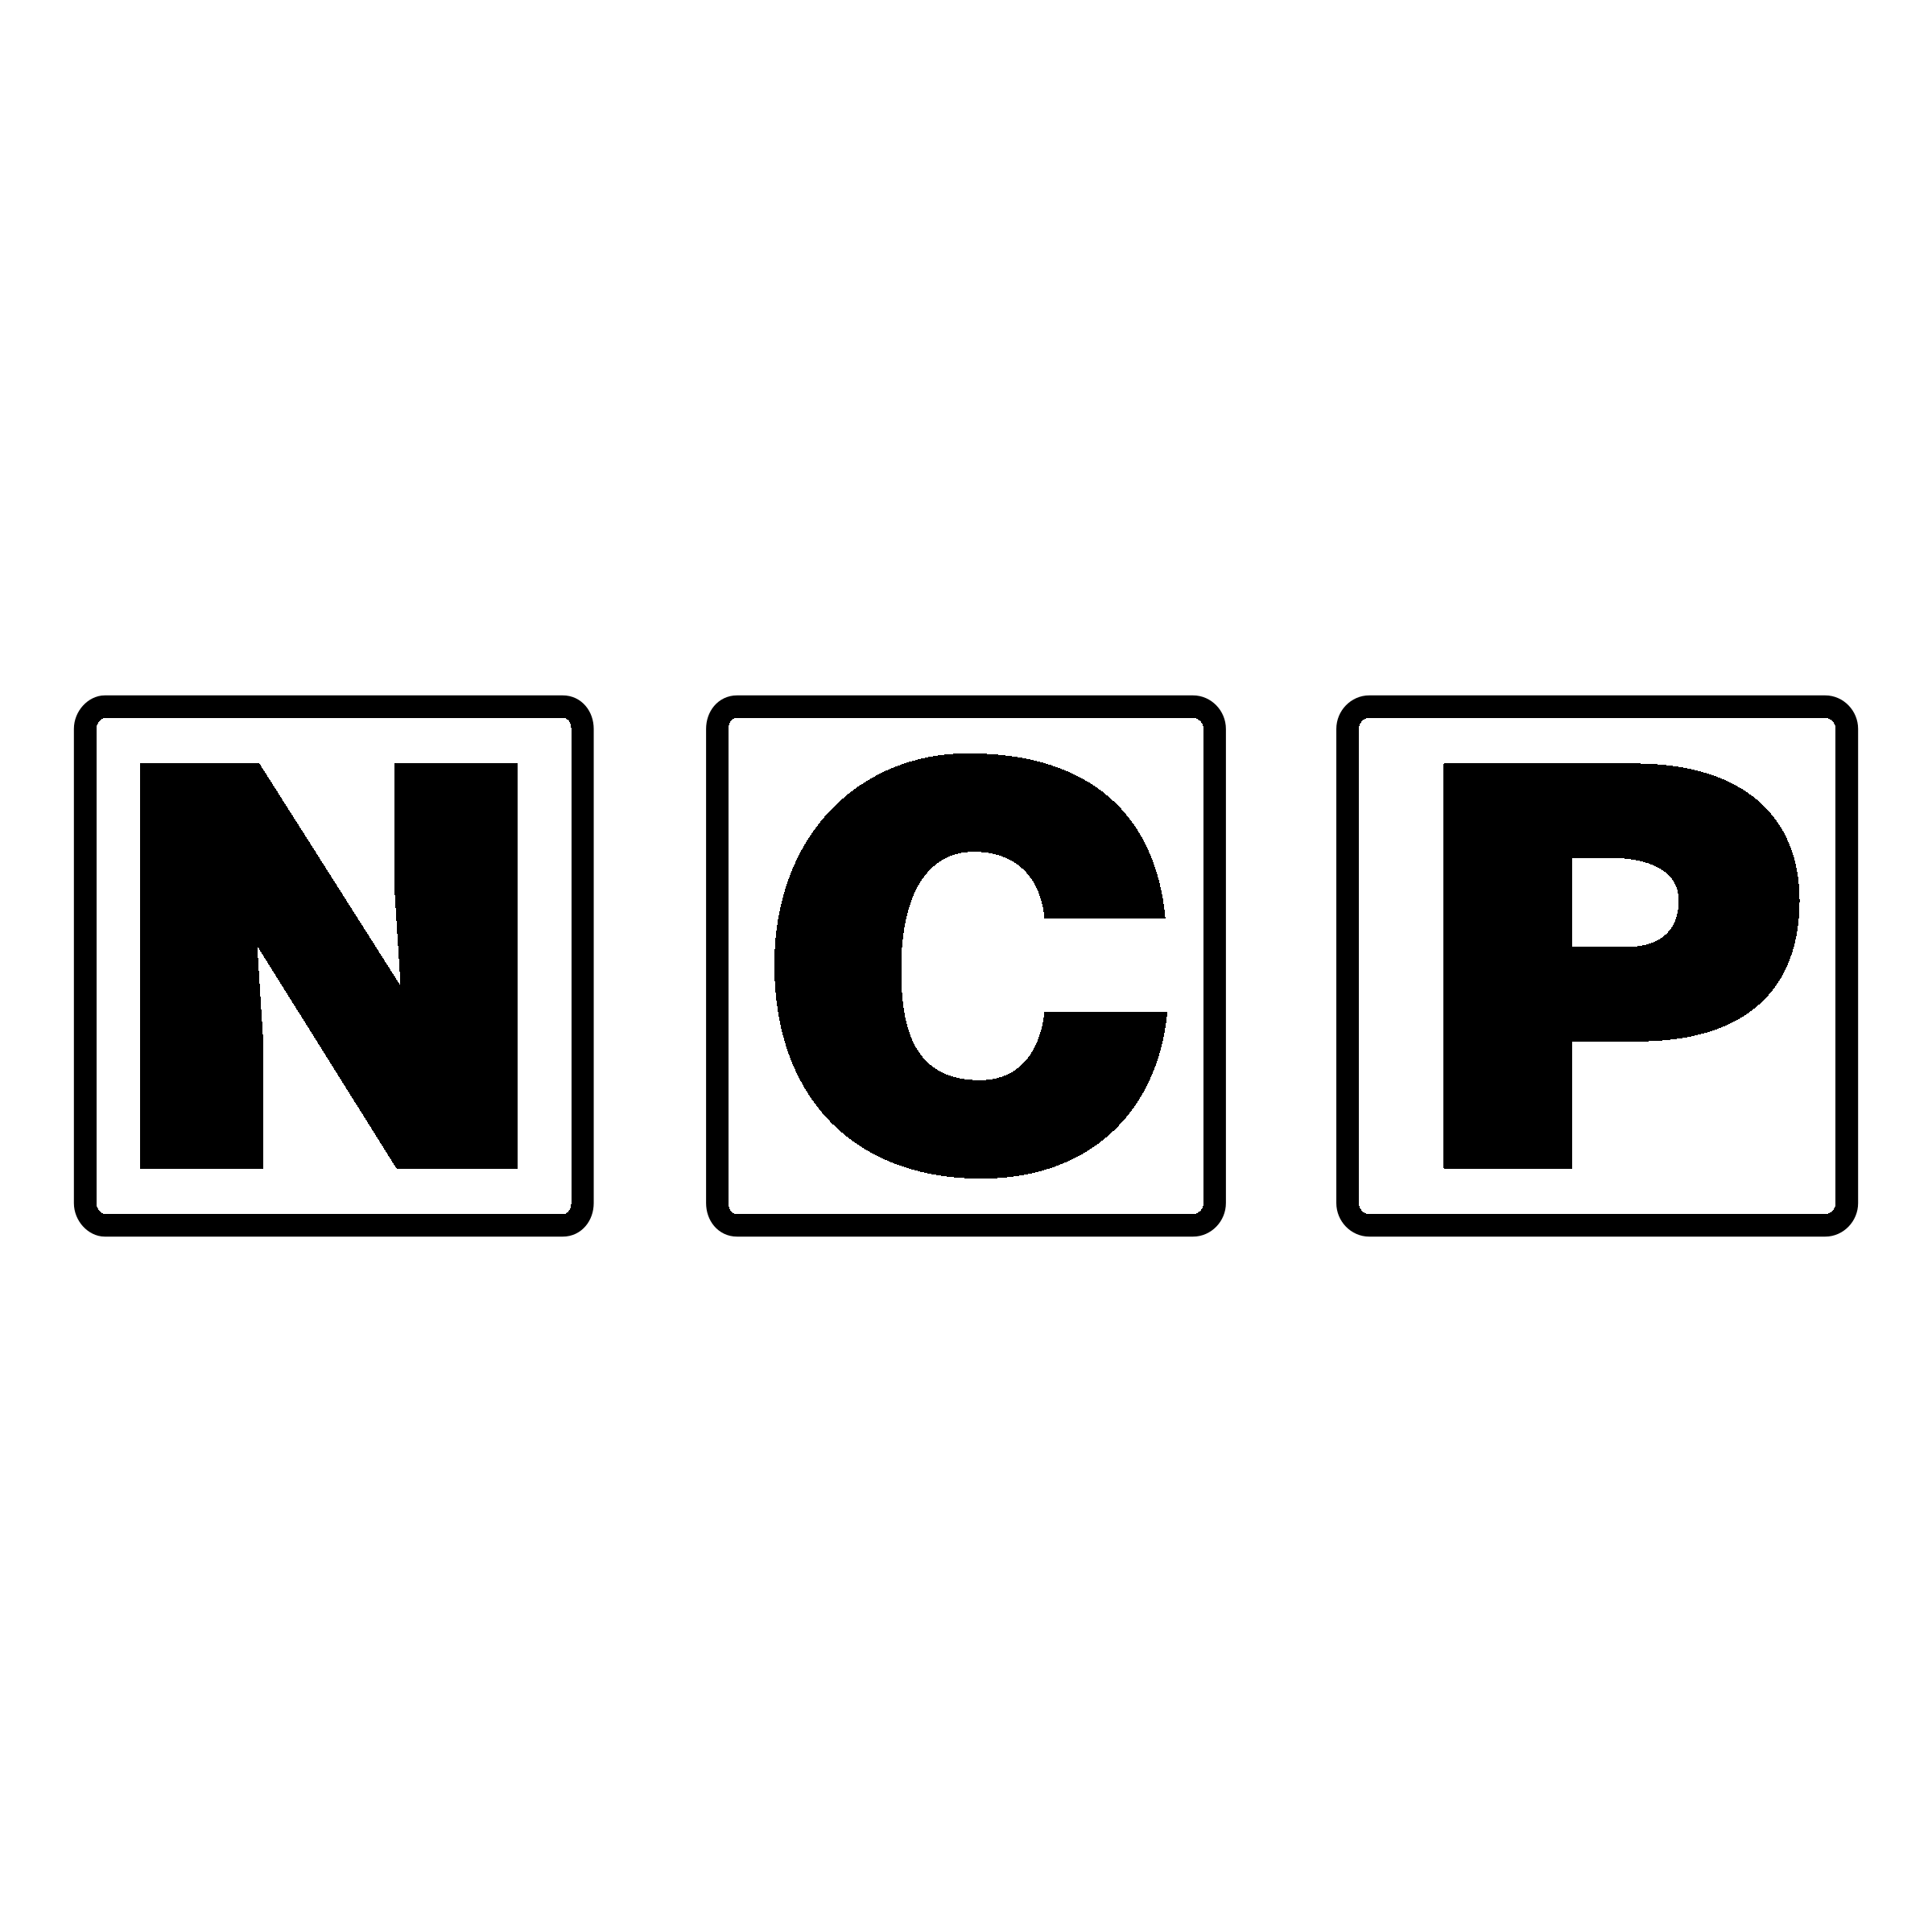 NCP Logo - NCP Logo PNG Transparent & SVG Vector - Freebie Supply